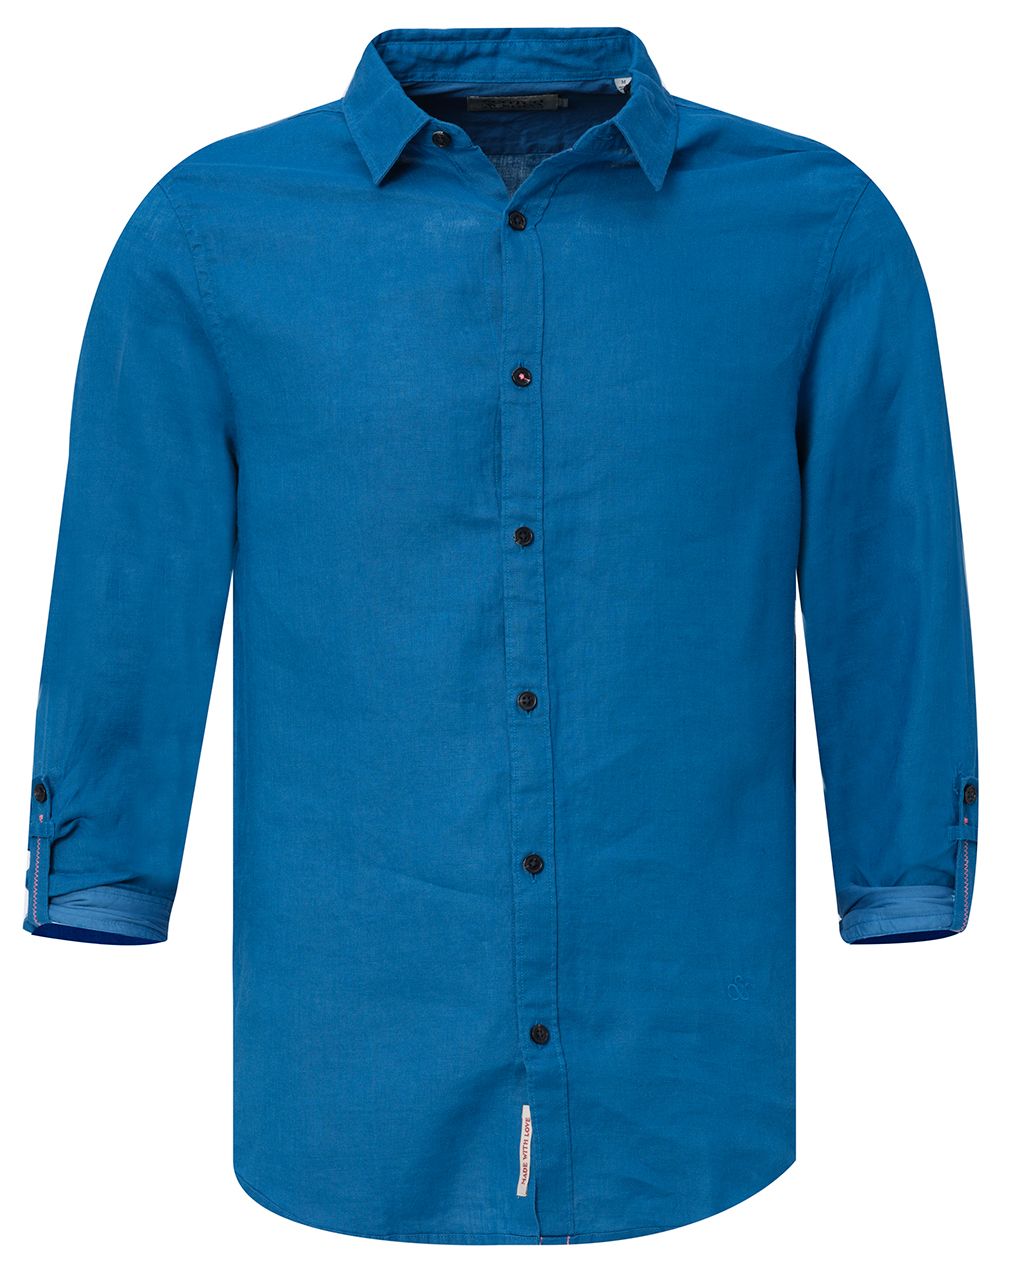 Scotch & Soda Casual Overhemd LM Donker blauw 075534-001-L